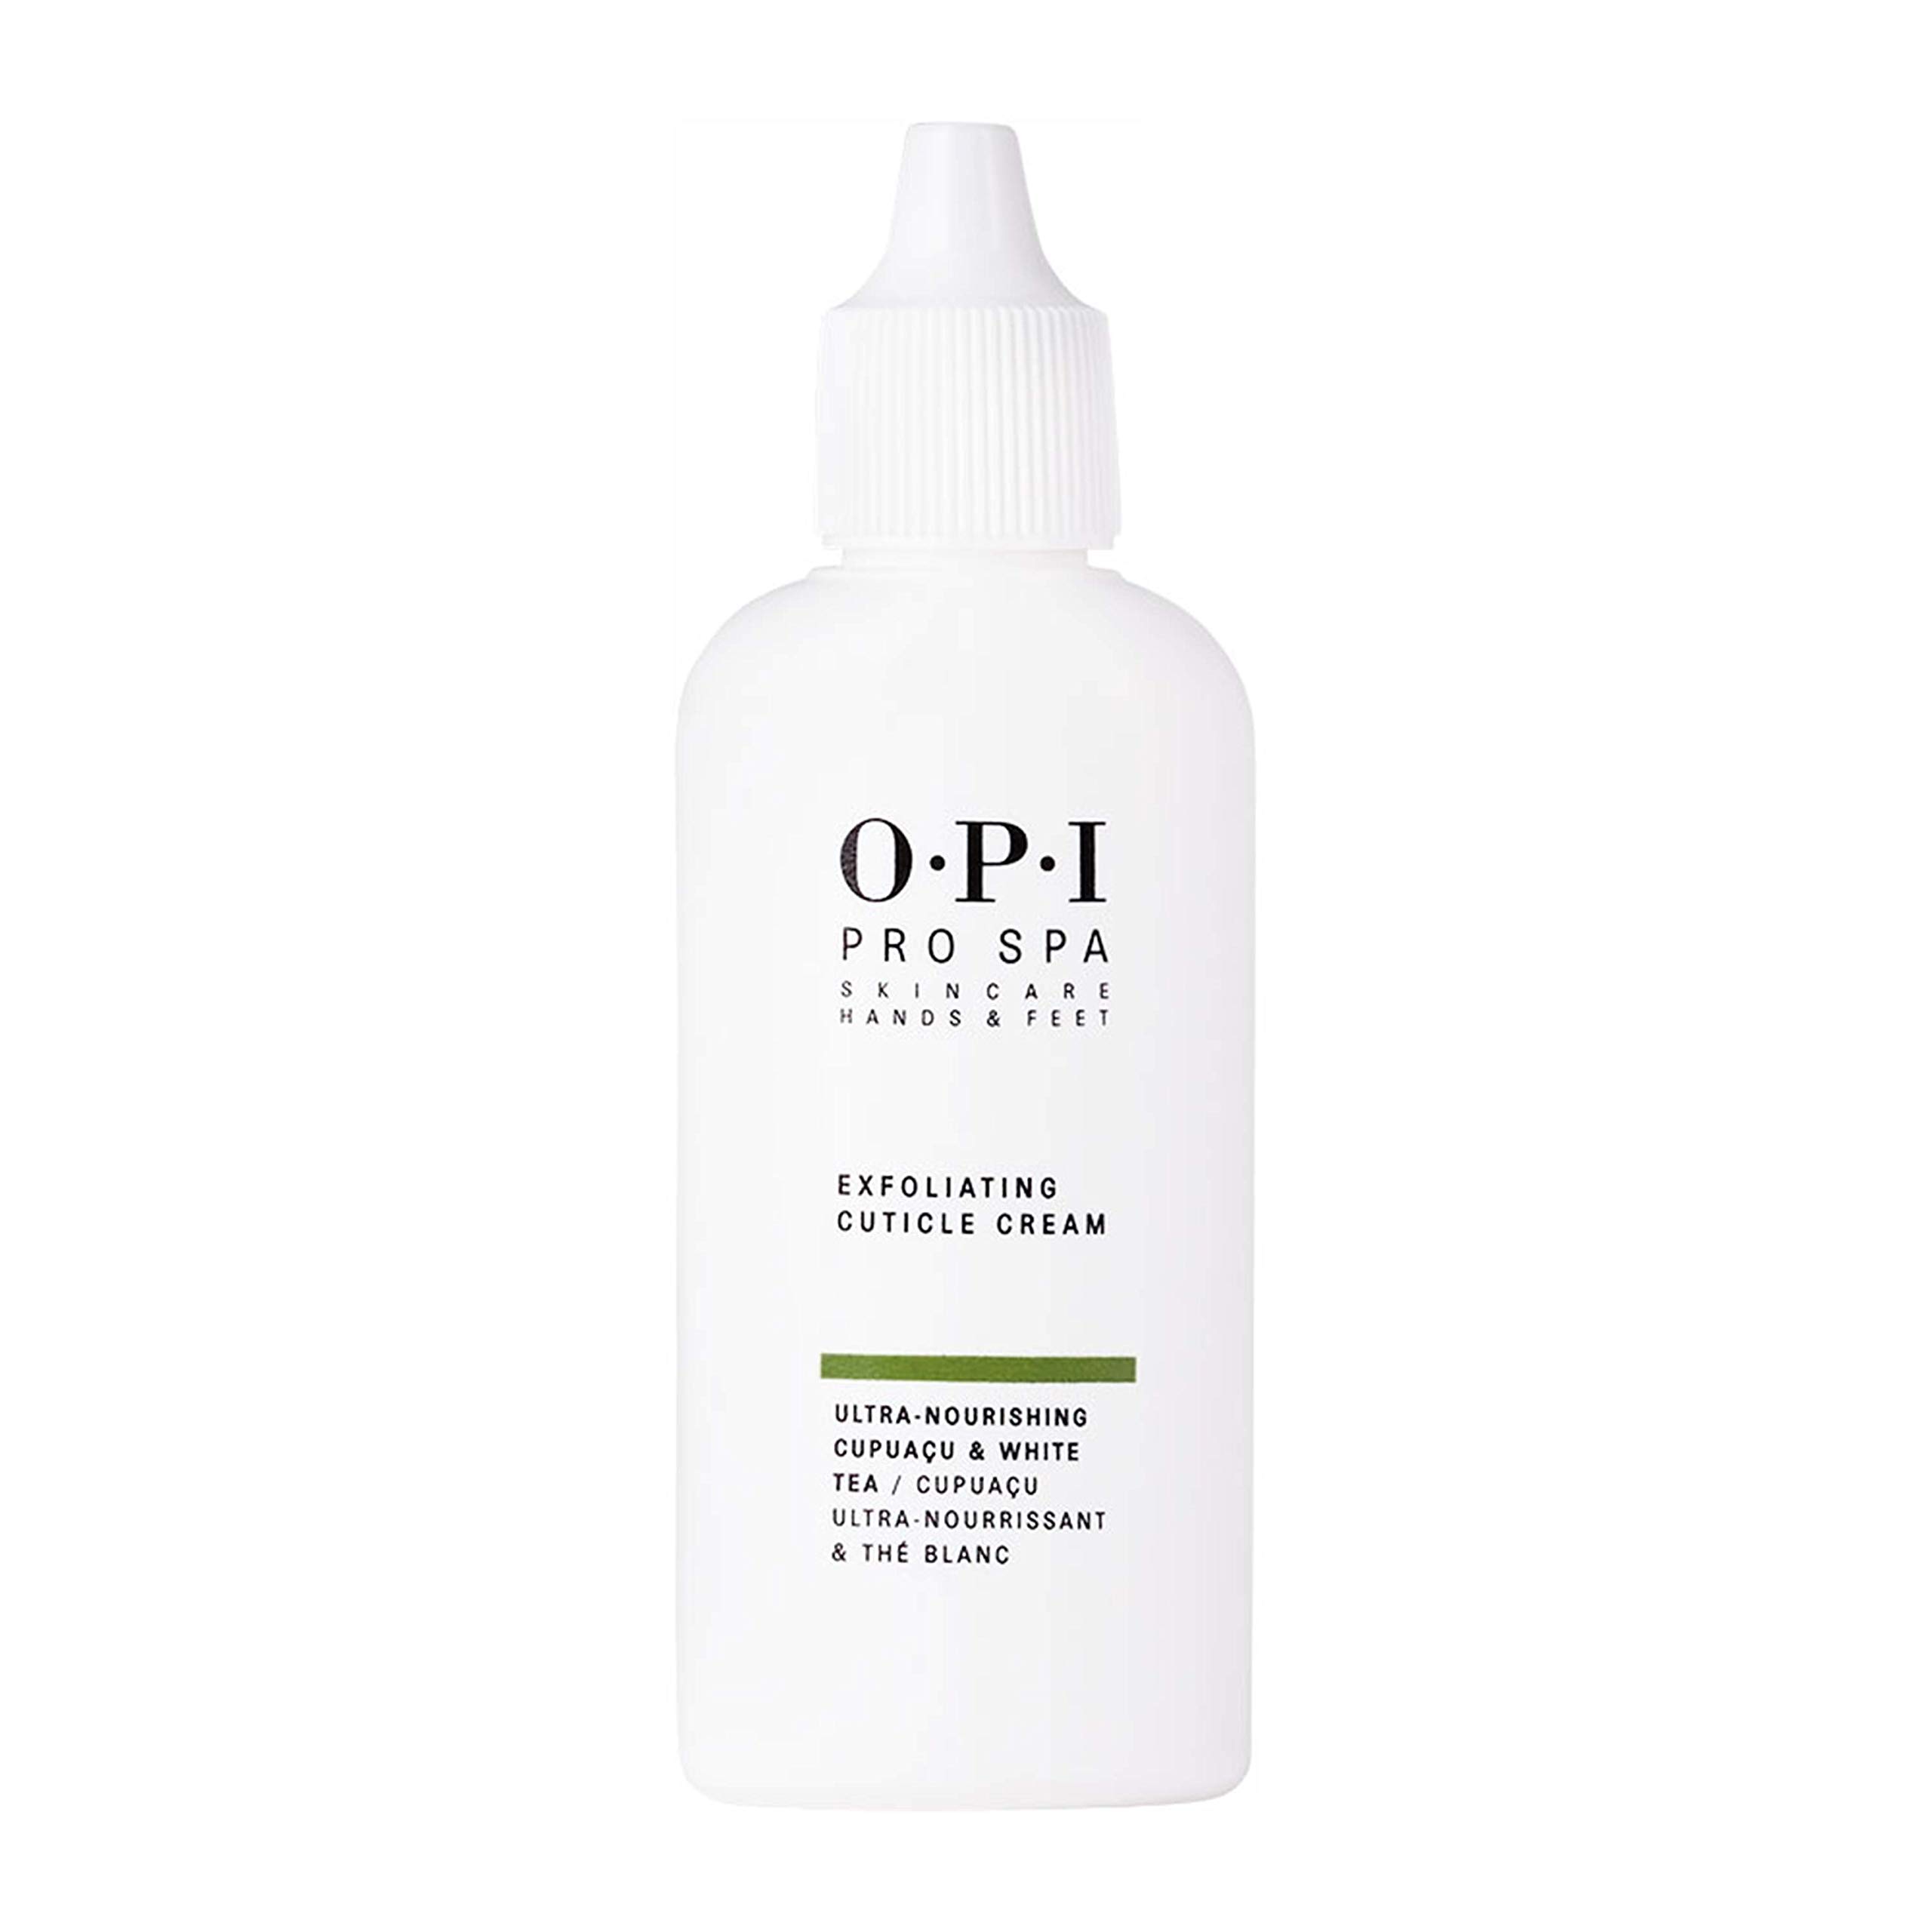 OPI ProSpa Exfoliating cuticle cream, 09 fl oz